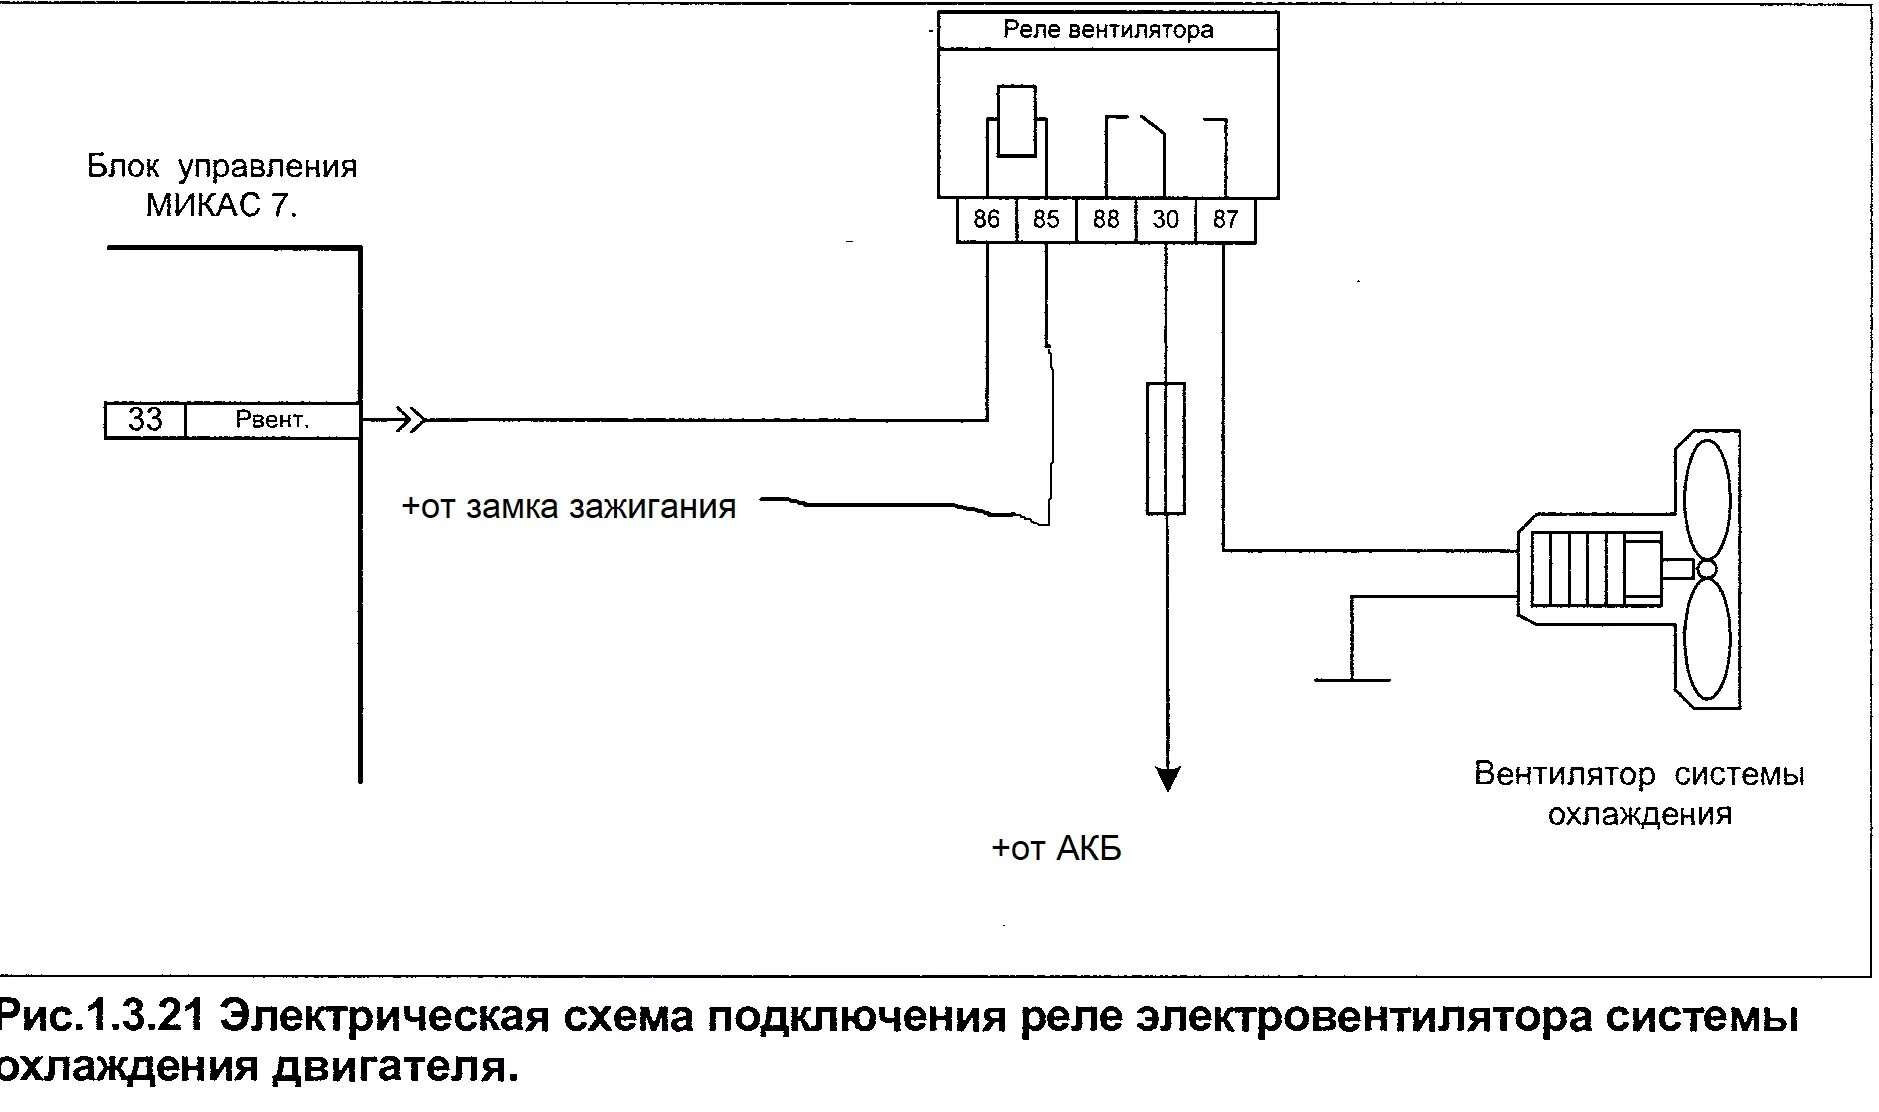 Схема включения электровентилятора ГАЗ 31105. Схема подключения вентилятора охлаждения ГАЗ 3102. Схема включения электровентилятора ГАЗ 3110. Схема включения вентилятора охлаждения ГАЗ 3110.